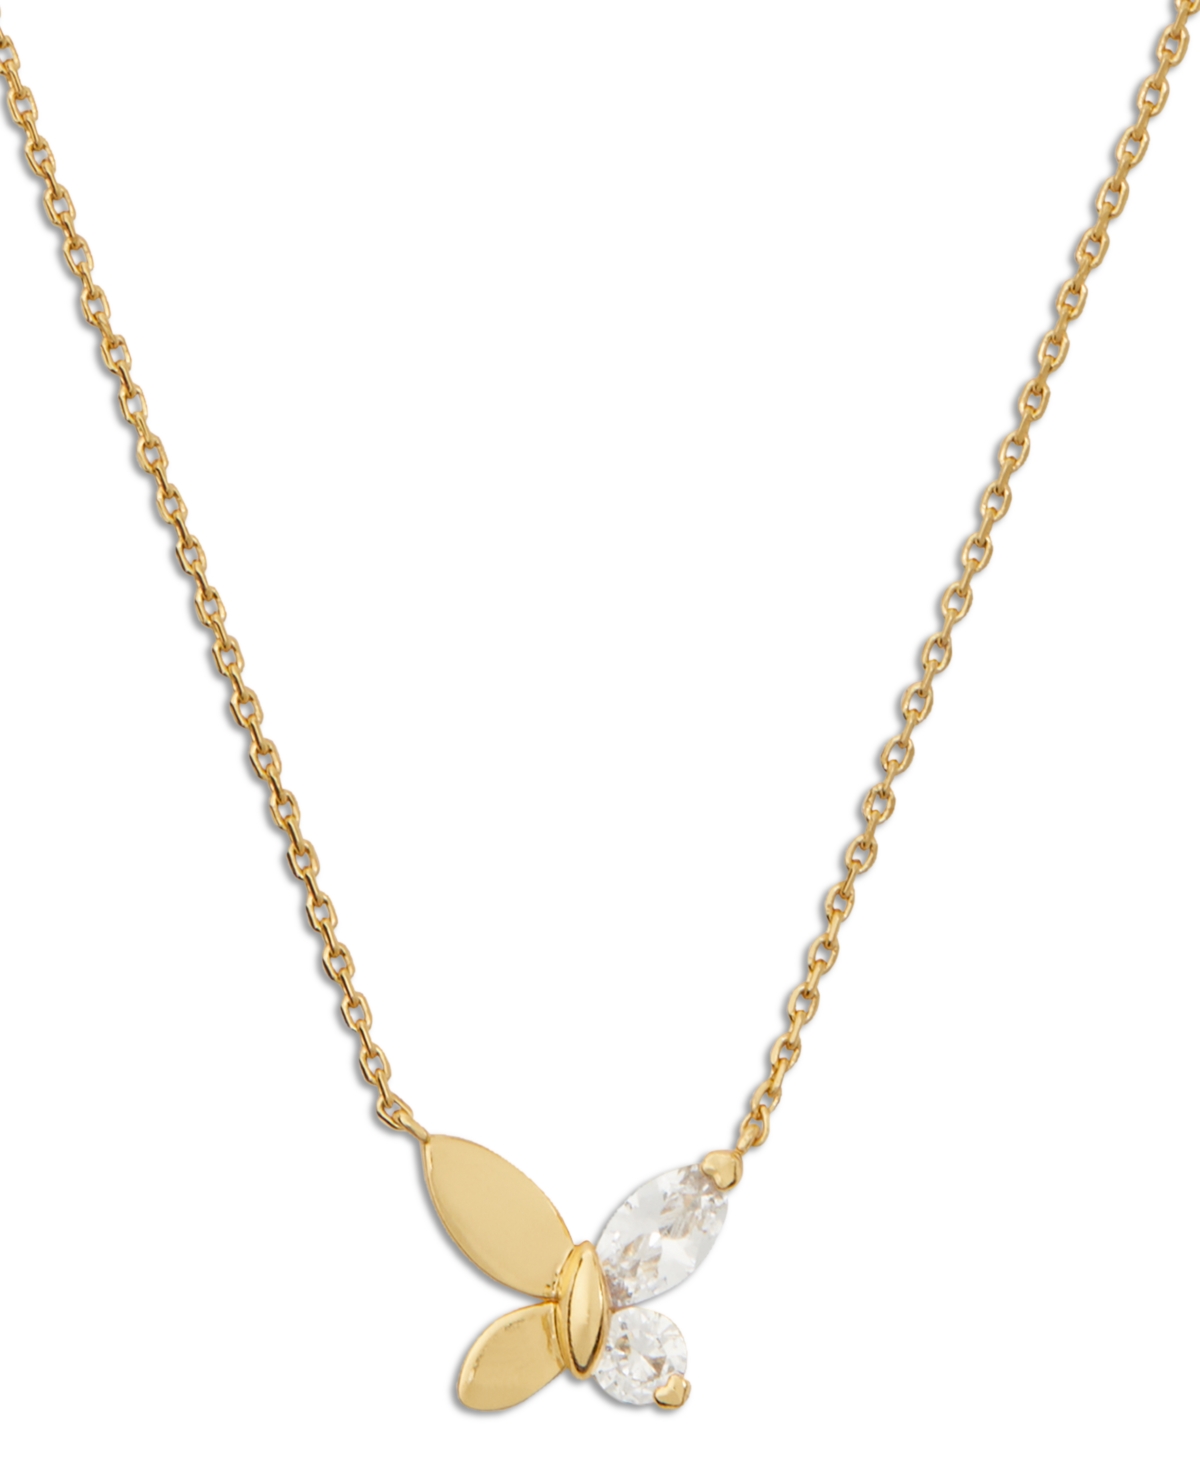 Gold-Tone Crystal Social Butterfly Pendant Necklace, 16" + 3" extender - Beigekhaki